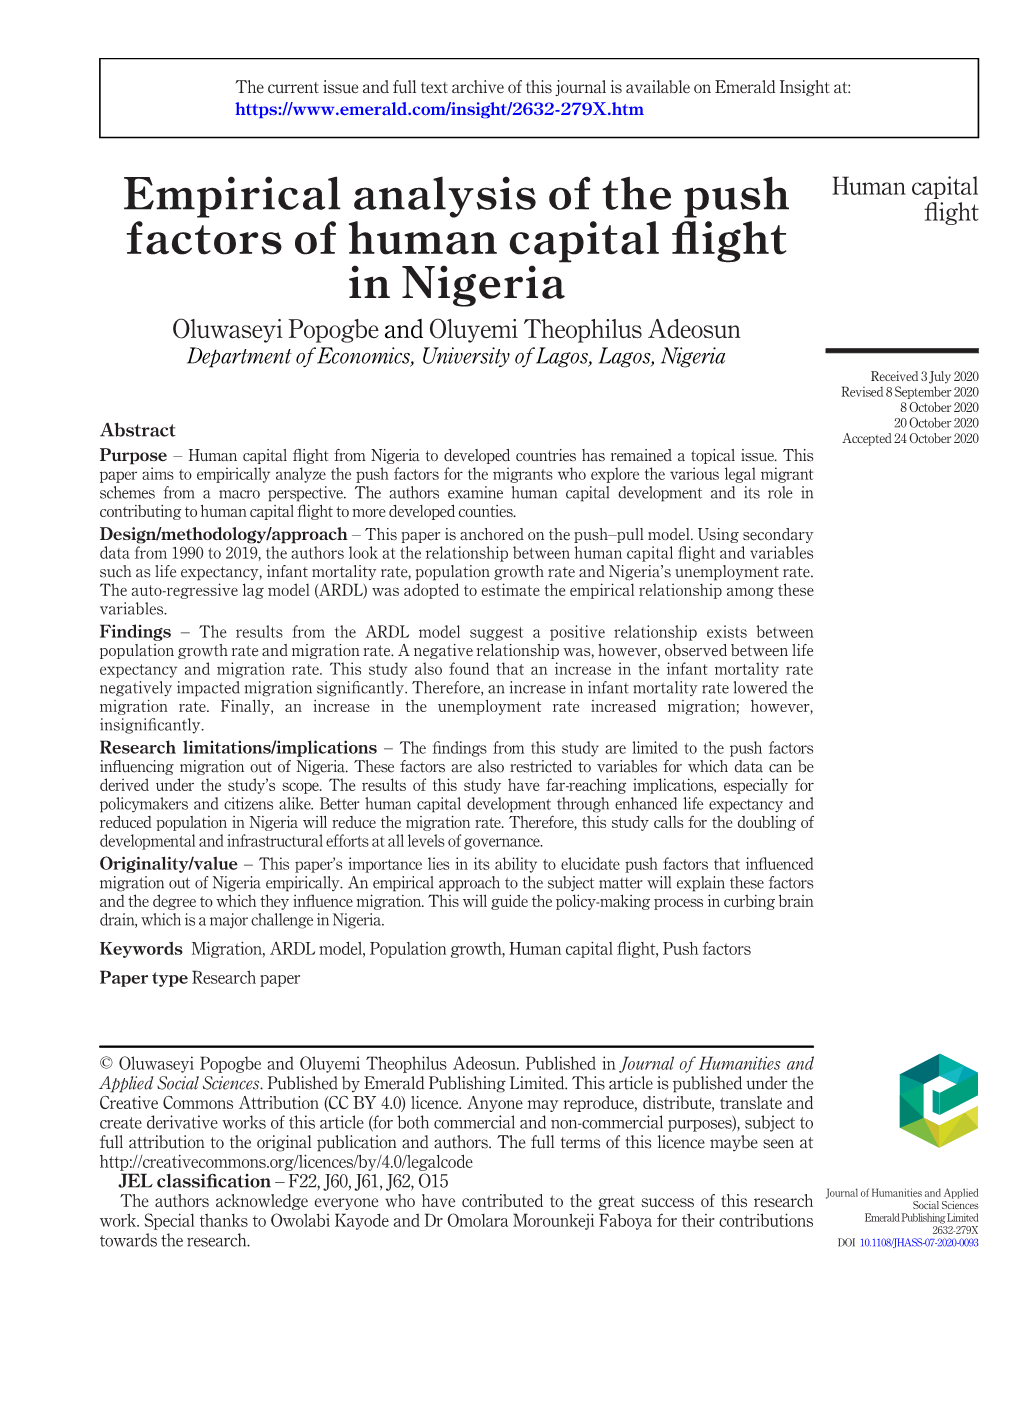 Empirical Analysis of the Push Factors of Human Capital Flight in Nigeria